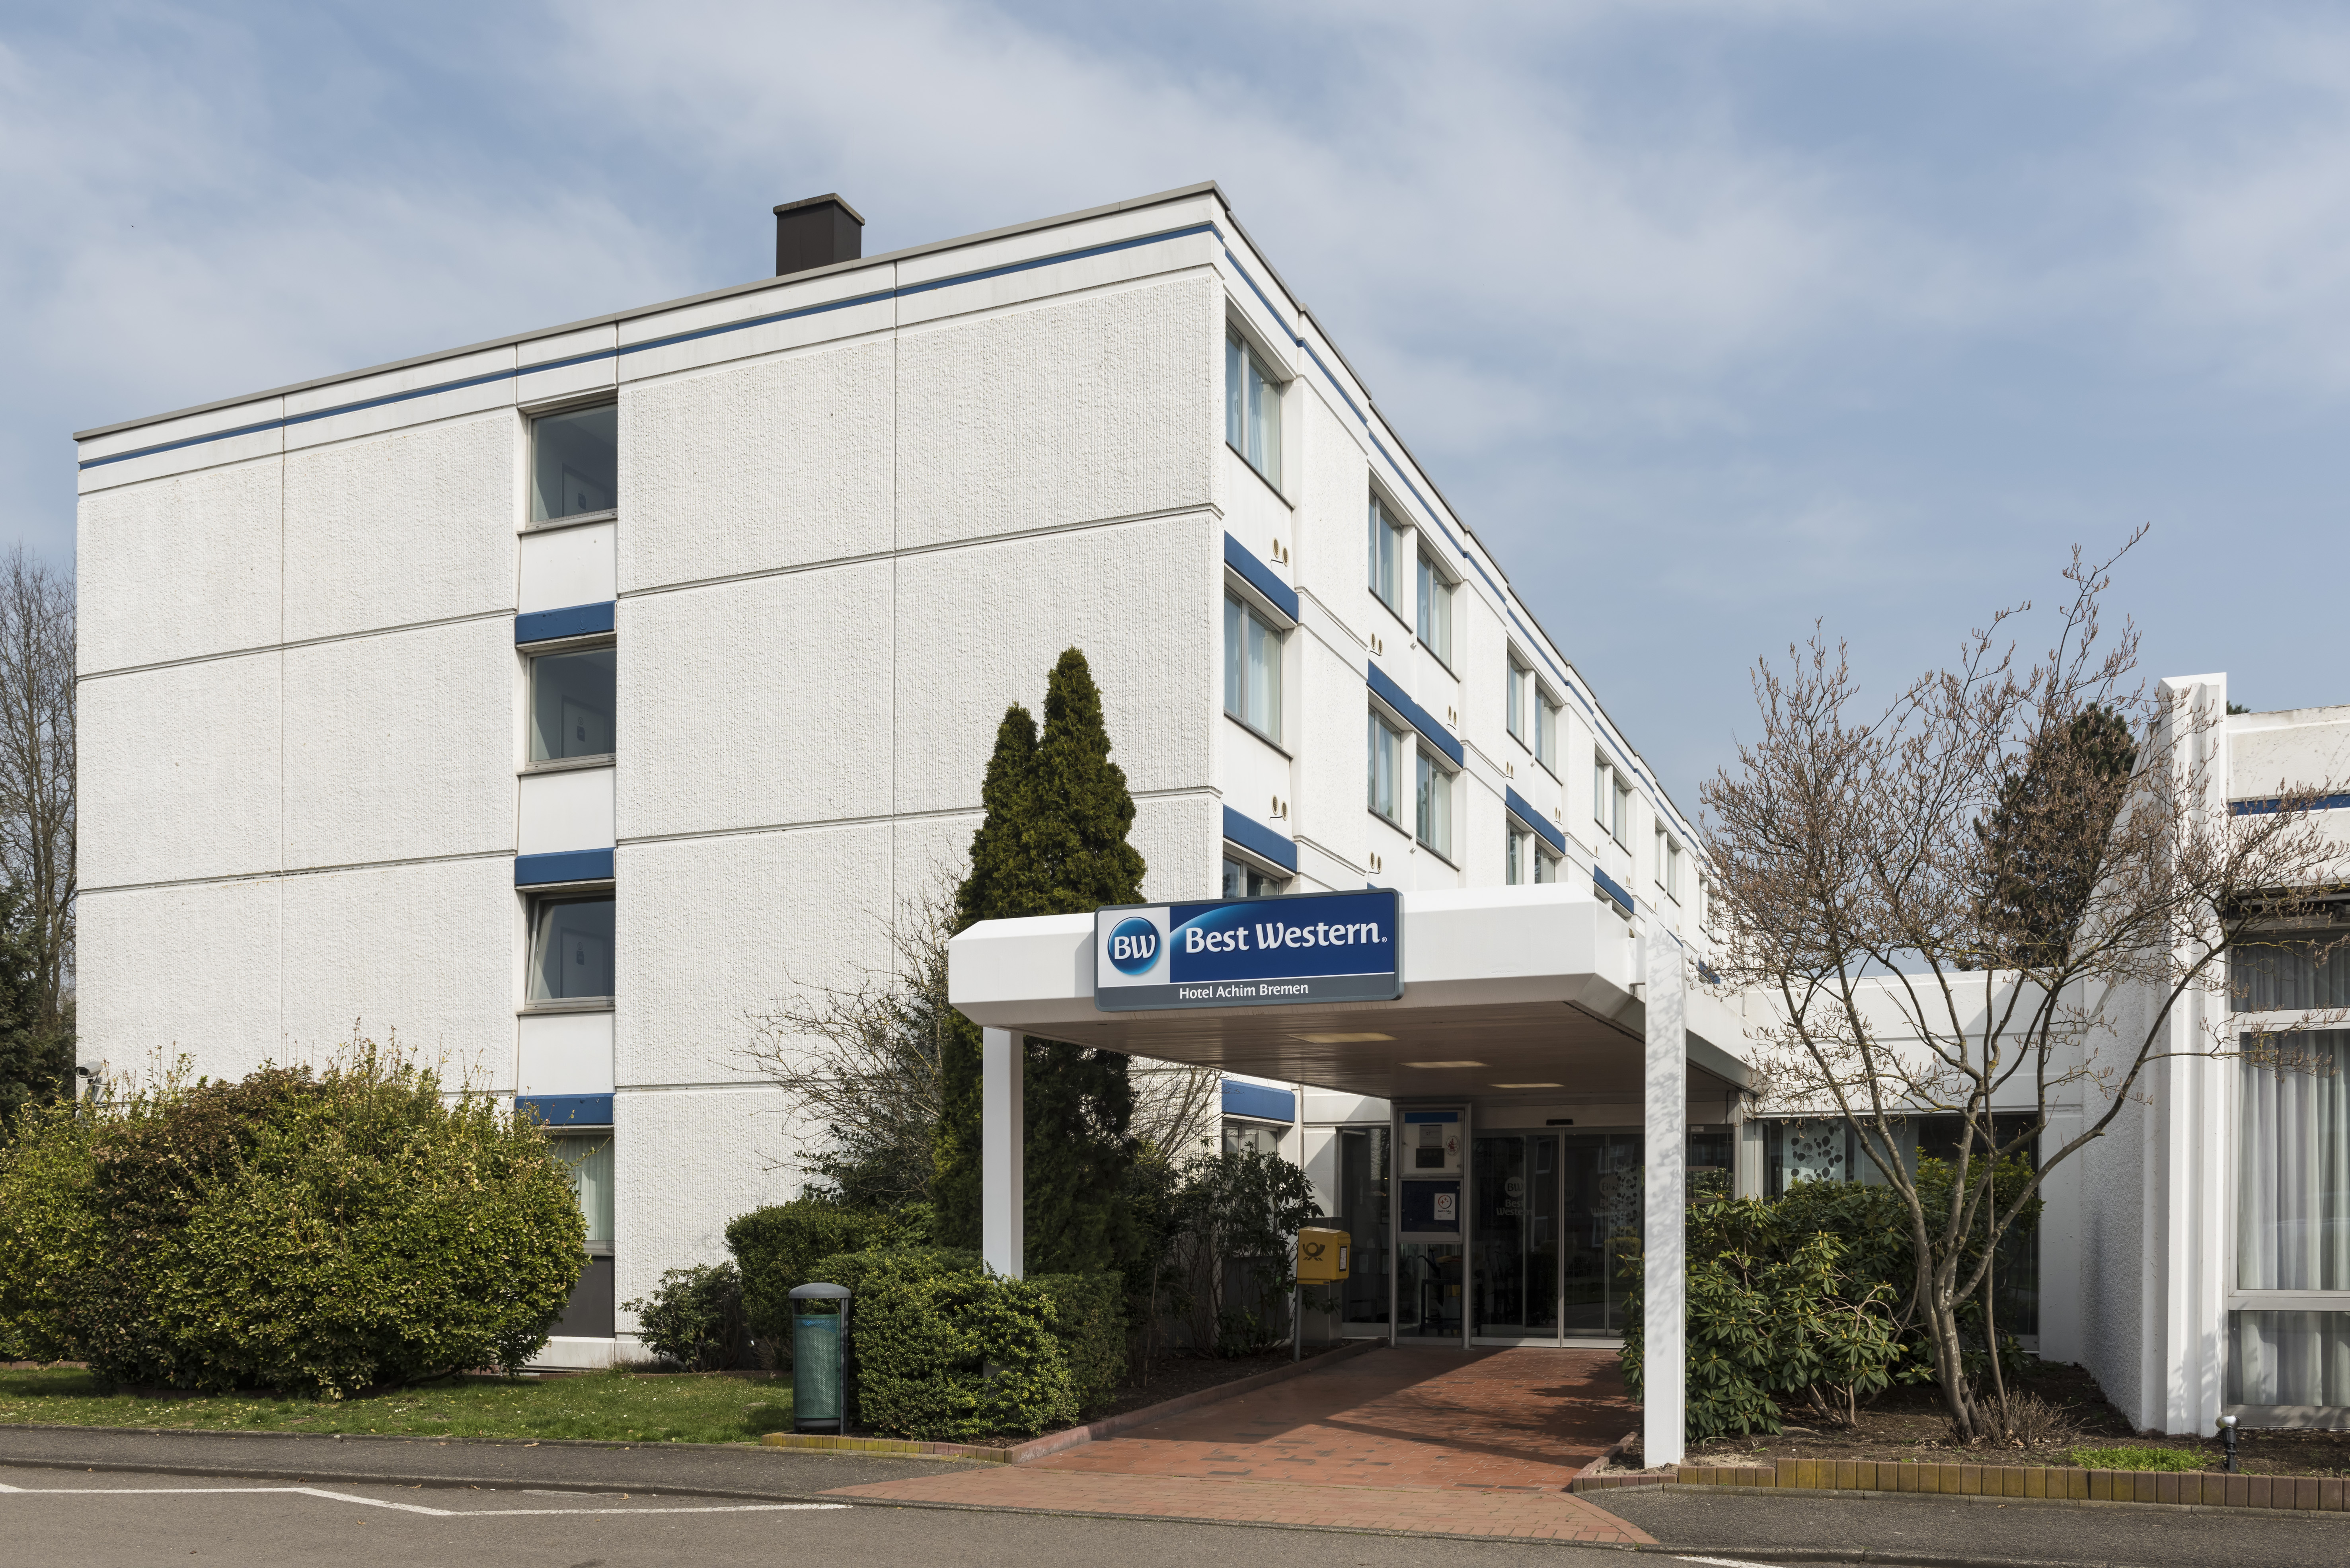 BEST WESTERN Hotel Achim Bremen <br/>54.66 ew <br/> <a href='http://vakantieoplossing.nl/outpage/?id=fcbf2ce2d08f2c663636081372a2605d' target='_blank'>View Details</a>